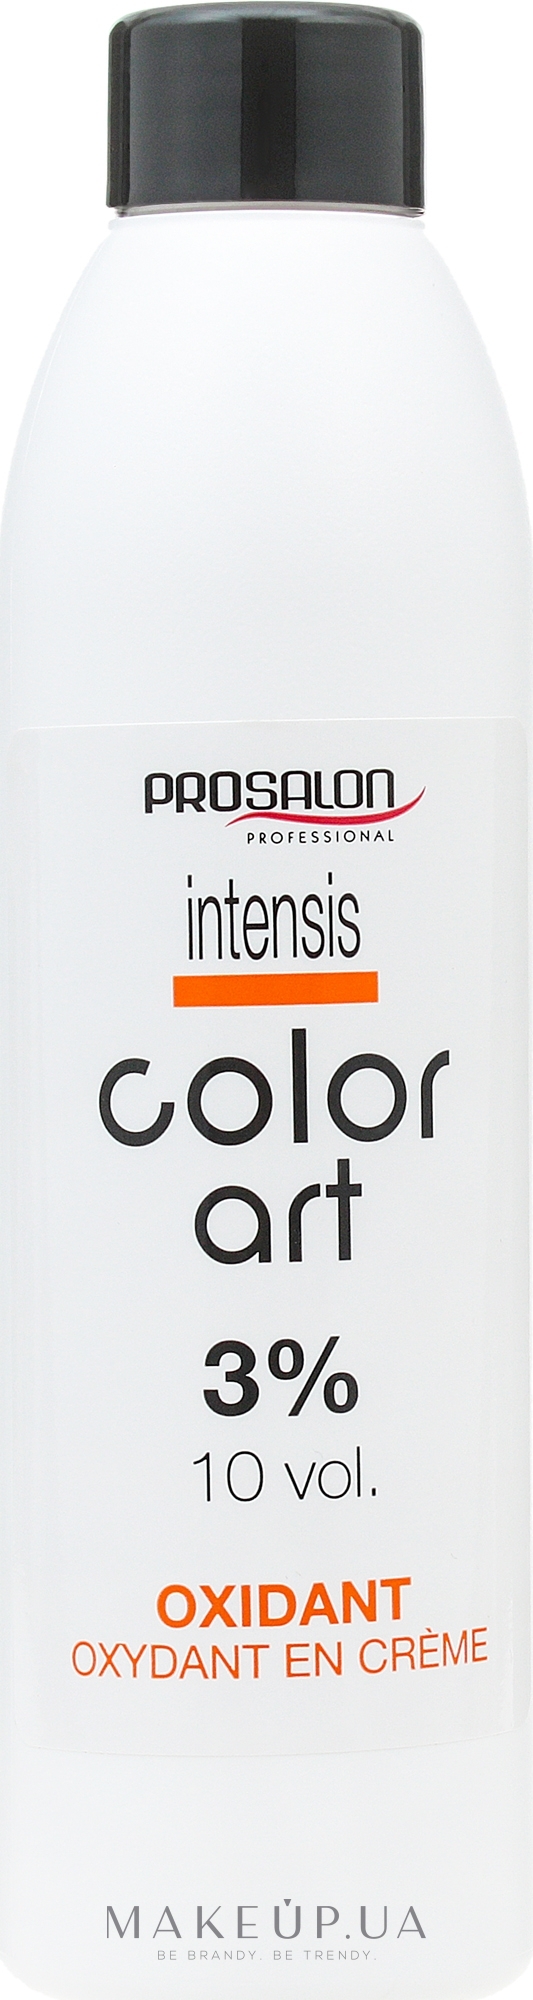 Оксидант 3% - Prosalon Intensis Color Art Oxydant vol 10 — фото 150ml